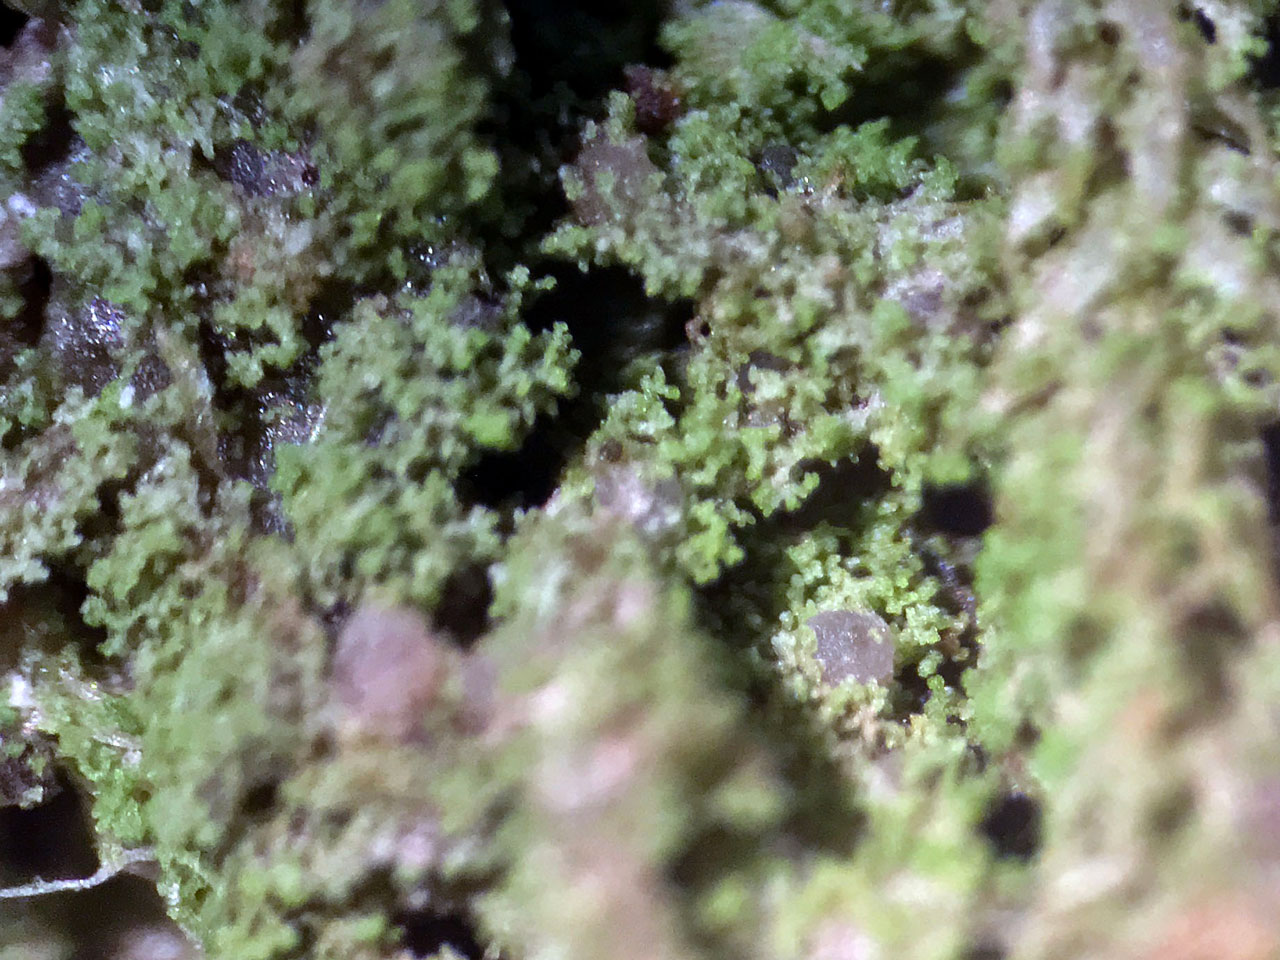 Bacidina celtica (Bacidina squamellosa), pycnidia, Sallow, Sticknage Wood, New Forest